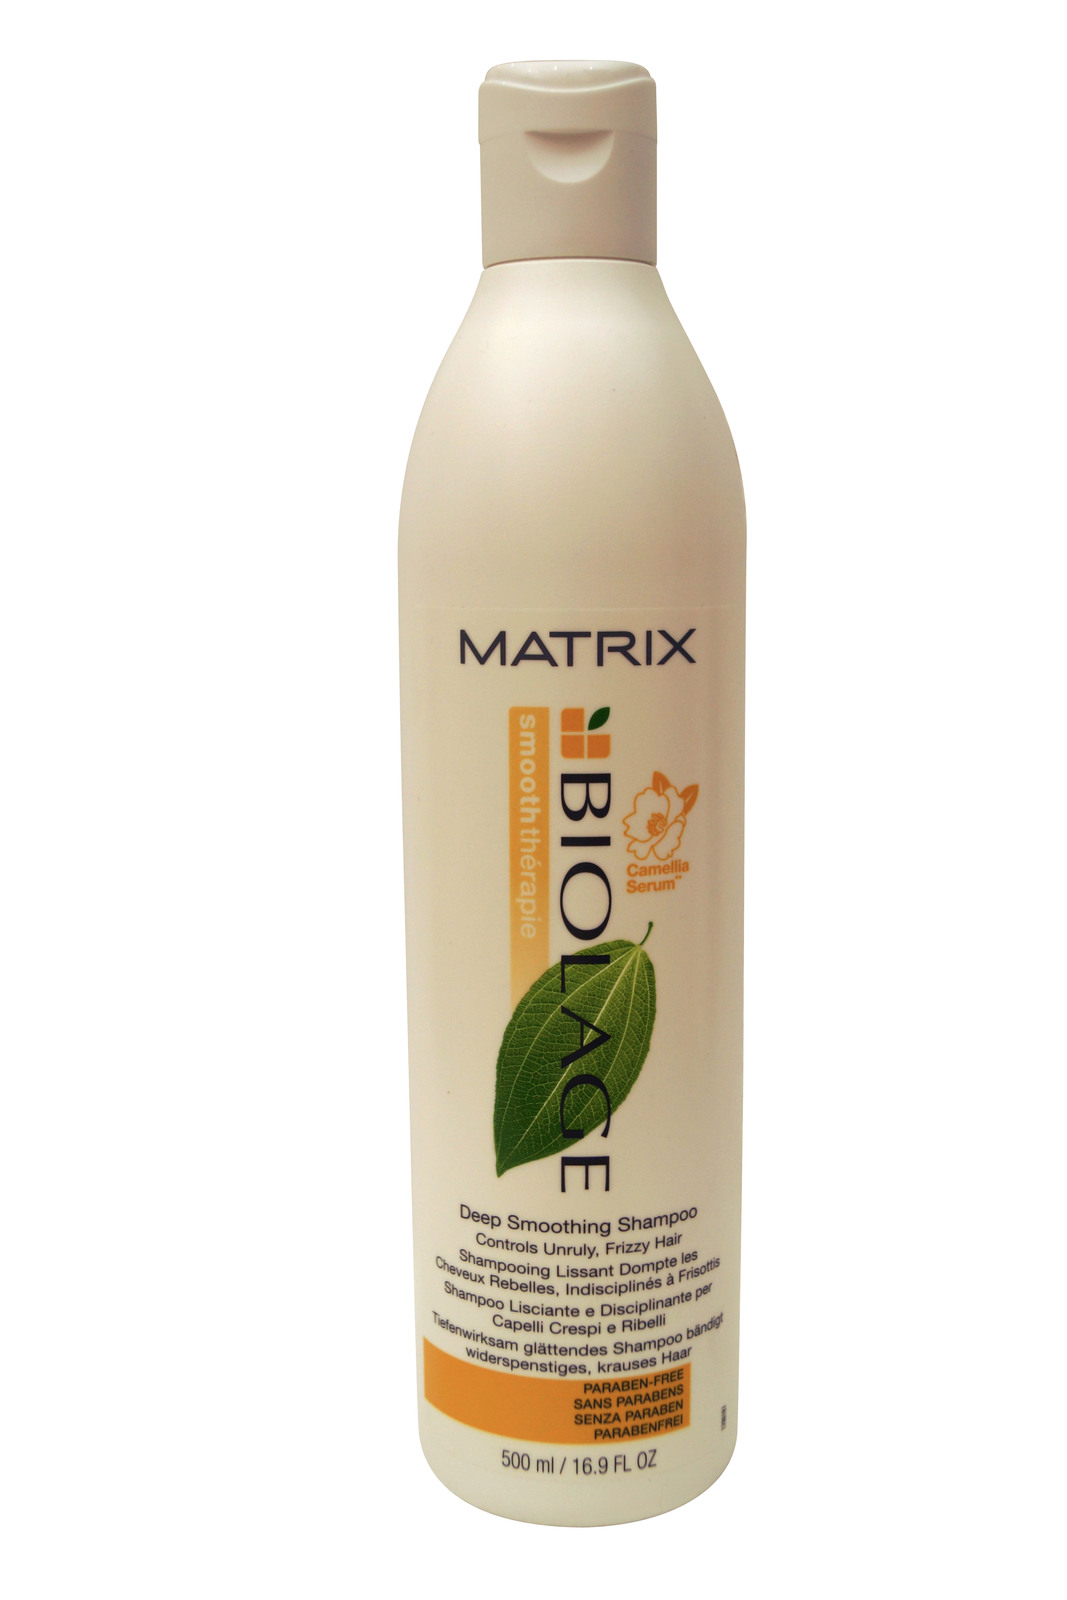 Matrix Biolage Deep Smoothing Shampoo 16.9 oz - $13.45